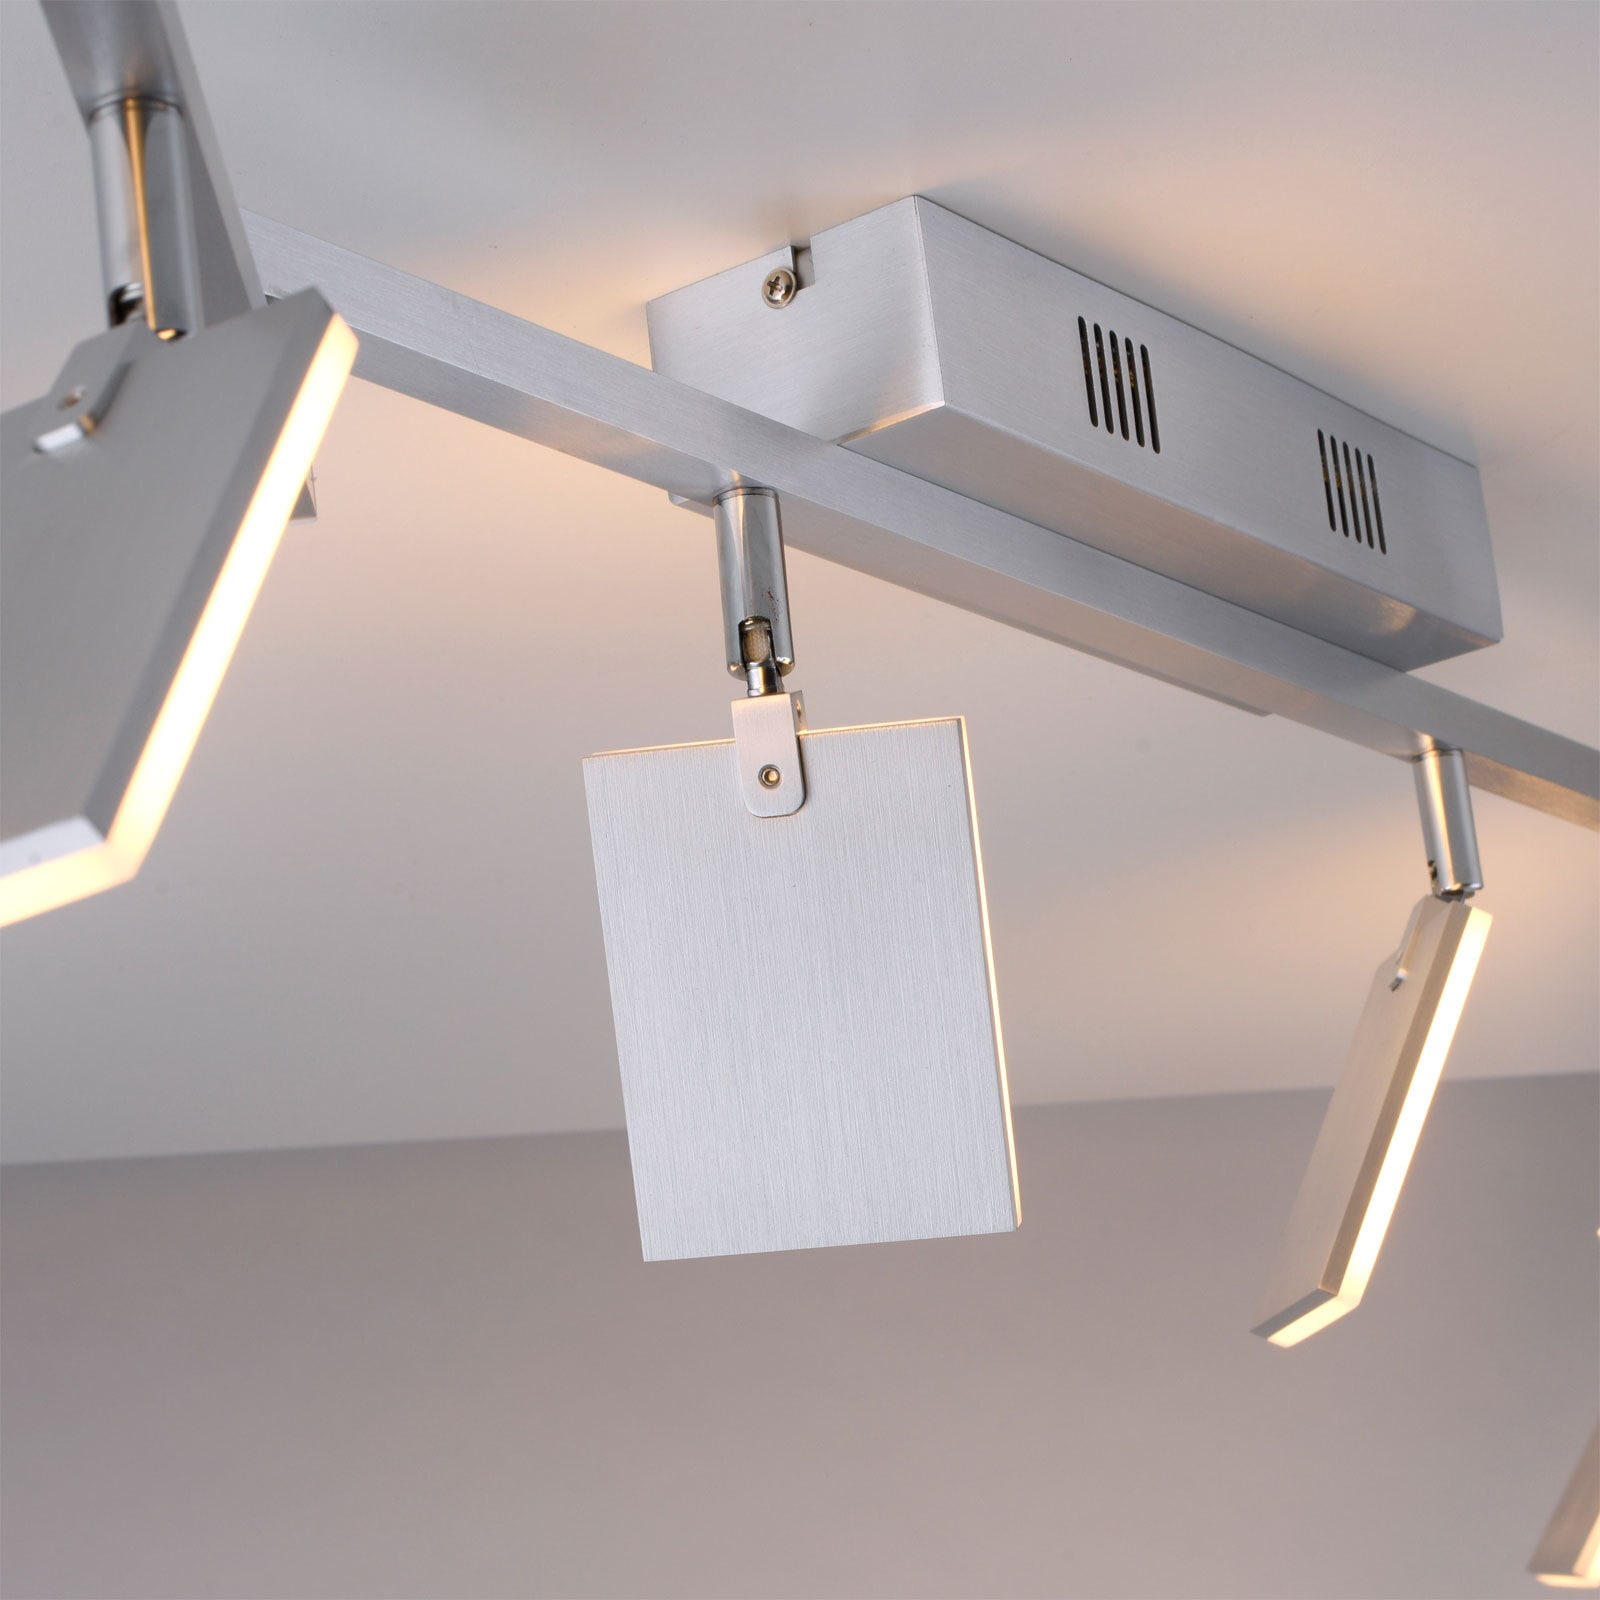 Paul Neuhaus LED Deckenlampe mit 6 Spots PURE-MIRA alufarbig